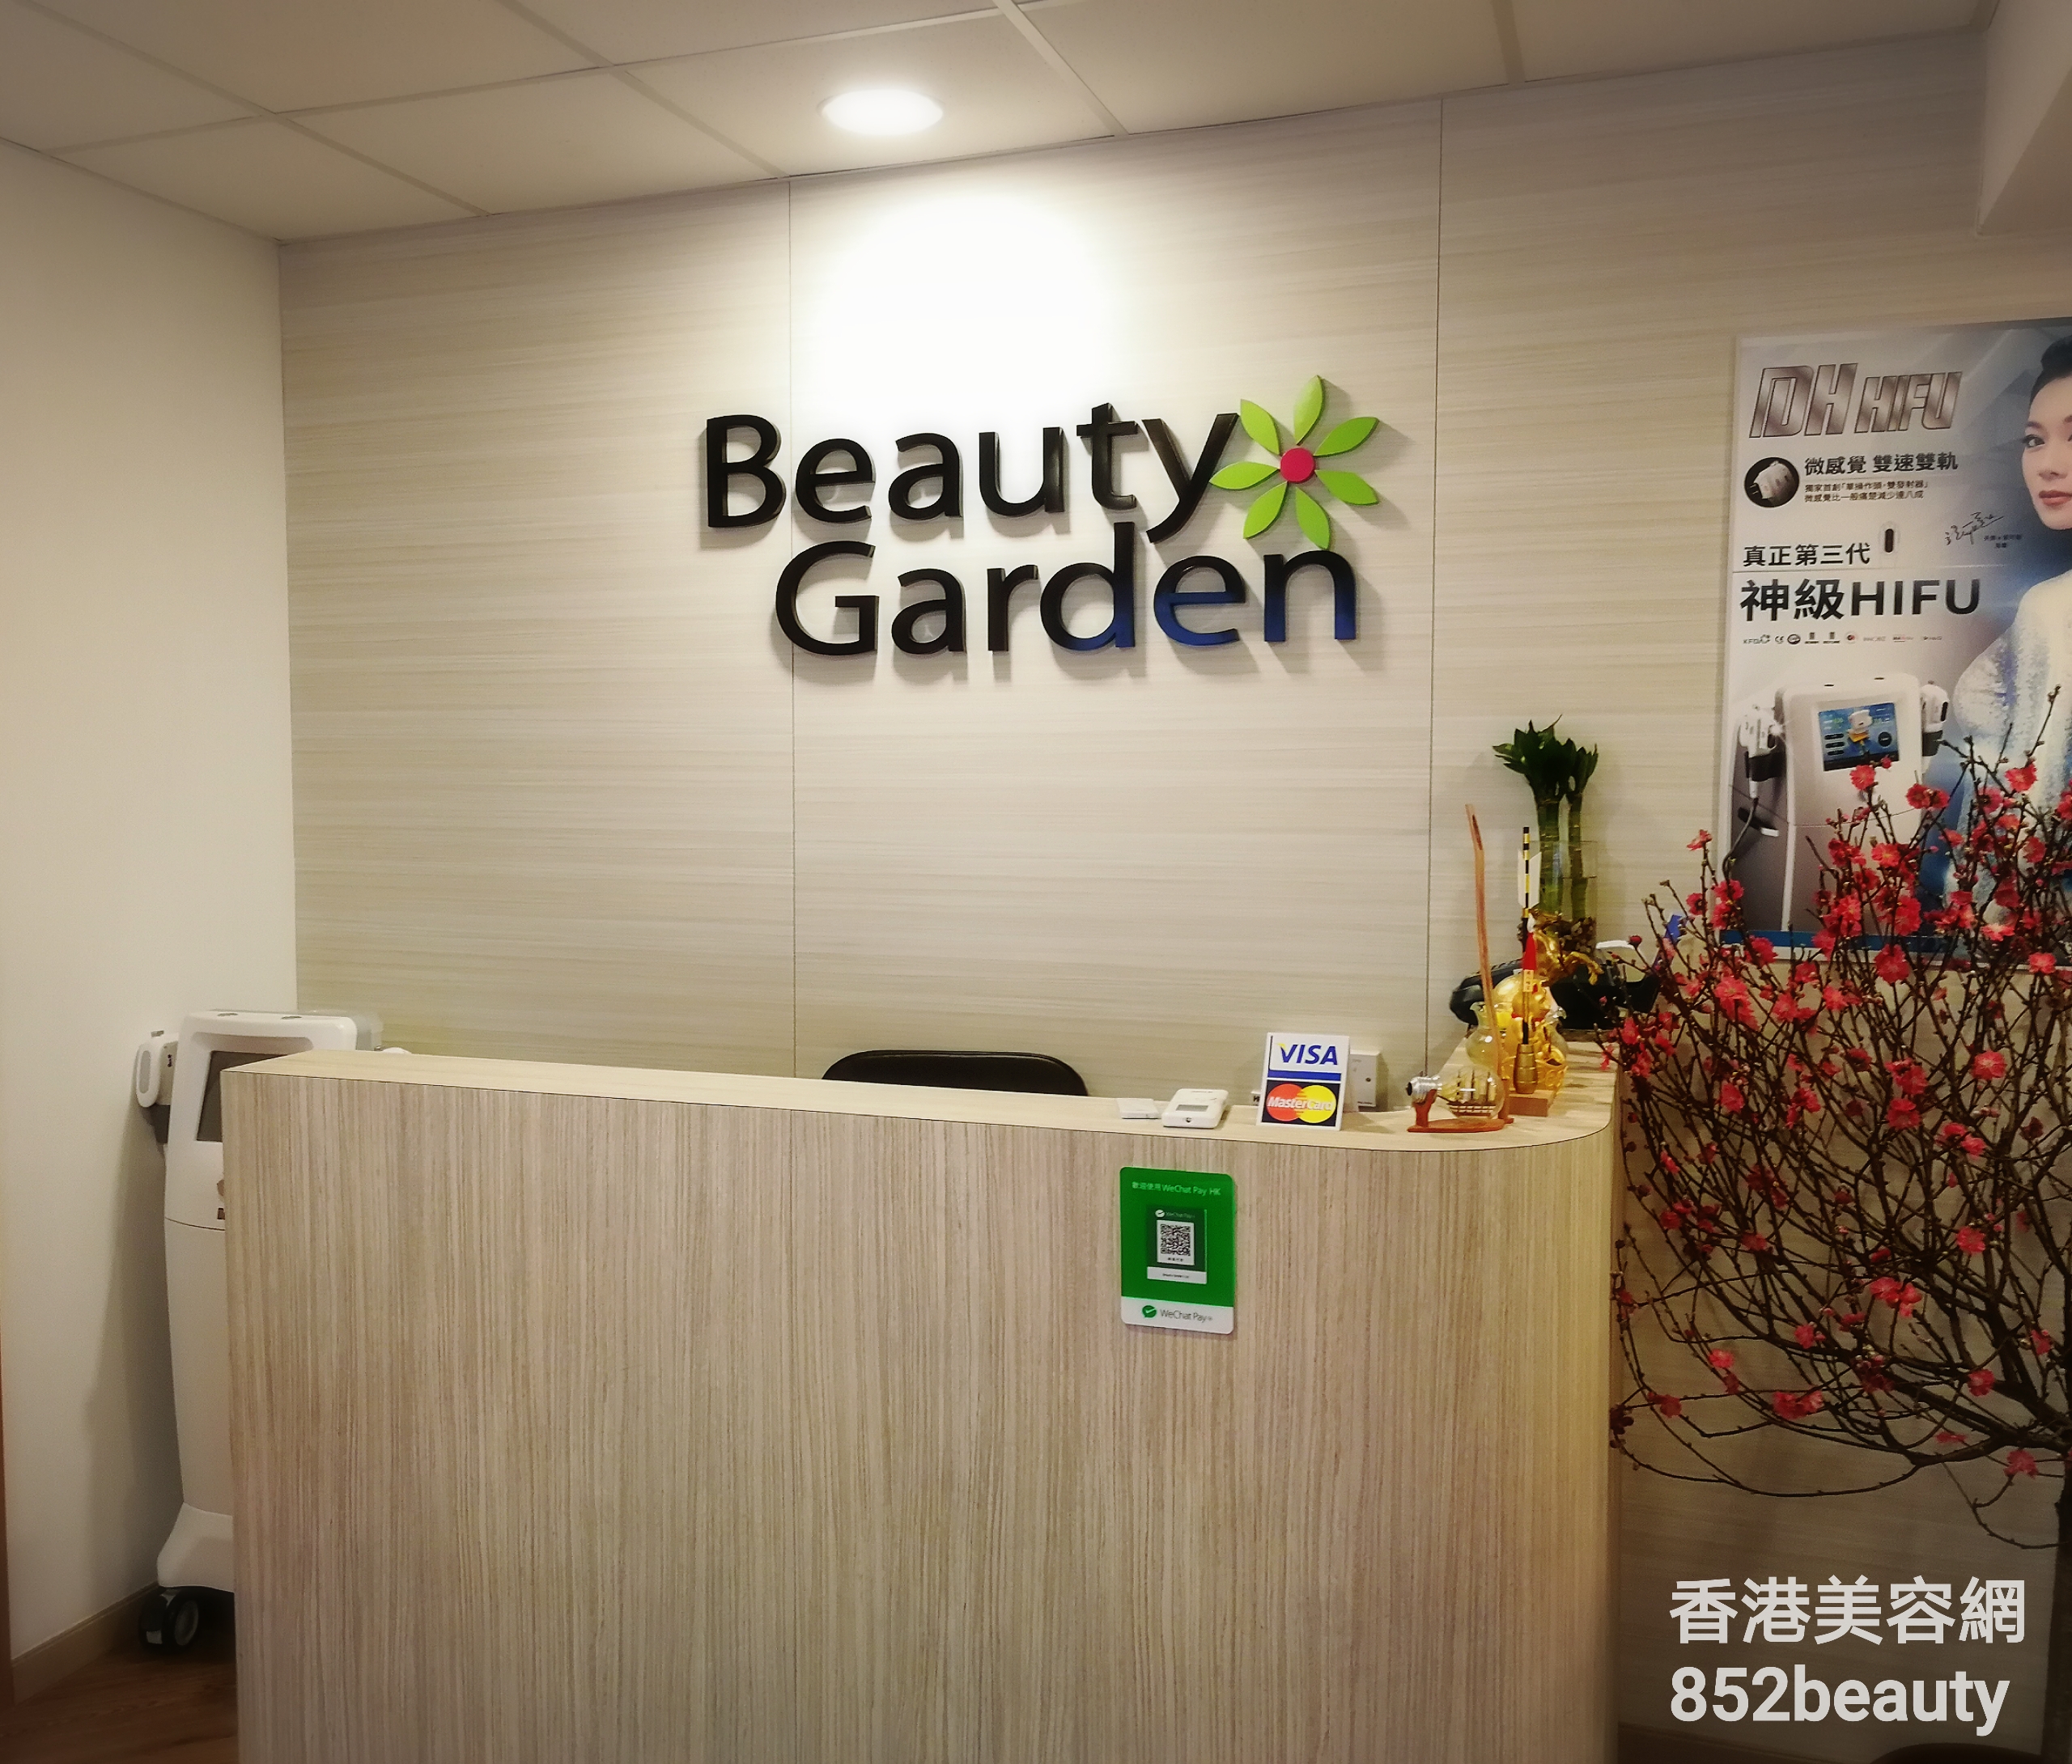 Beauty Salon: Beauty Garden